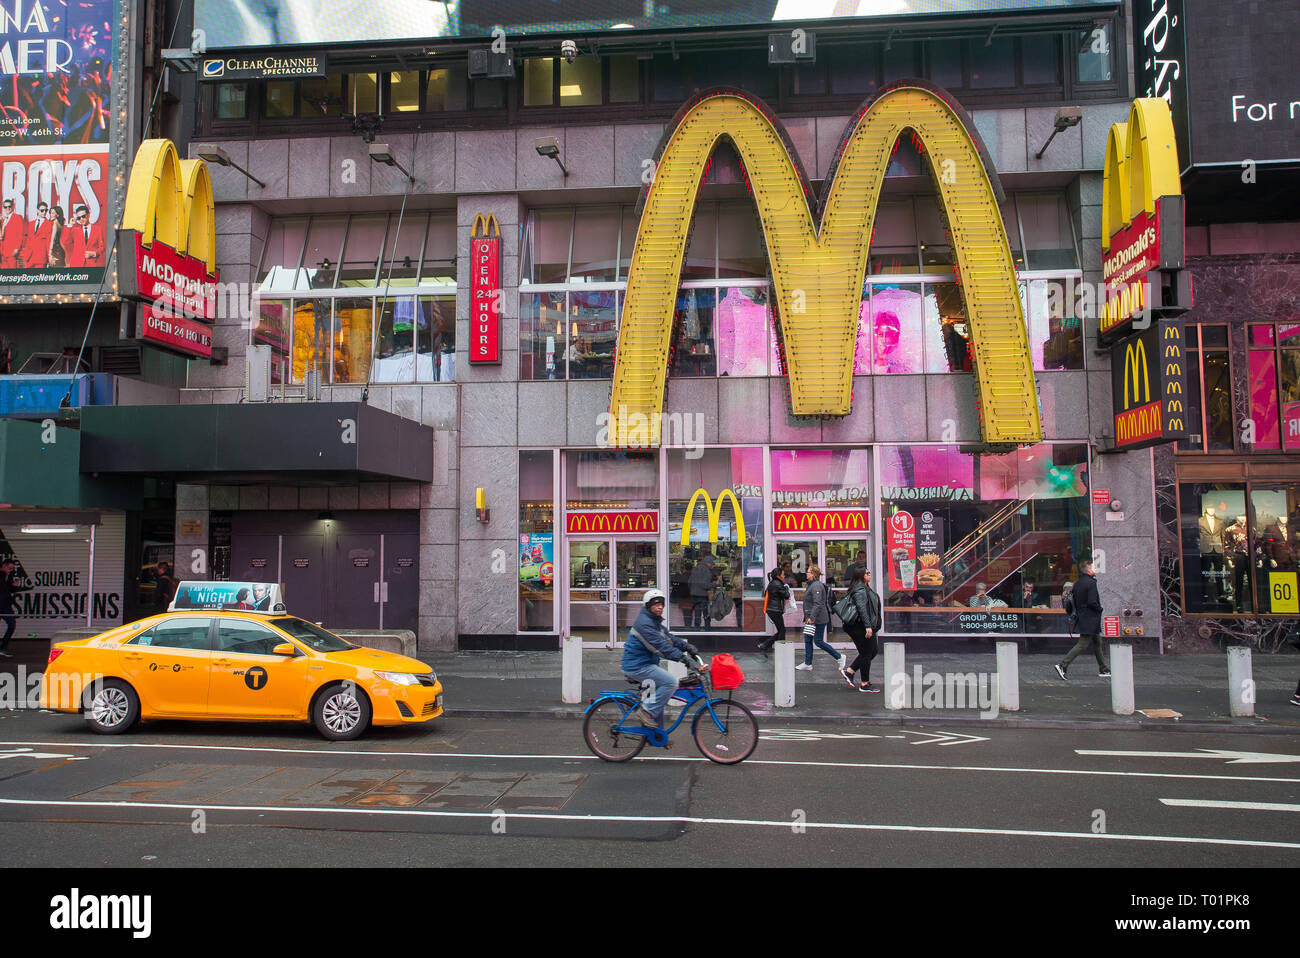 McDonald's Restaurant fast food in Times Square, New York City, NY, USA. Stockfoto